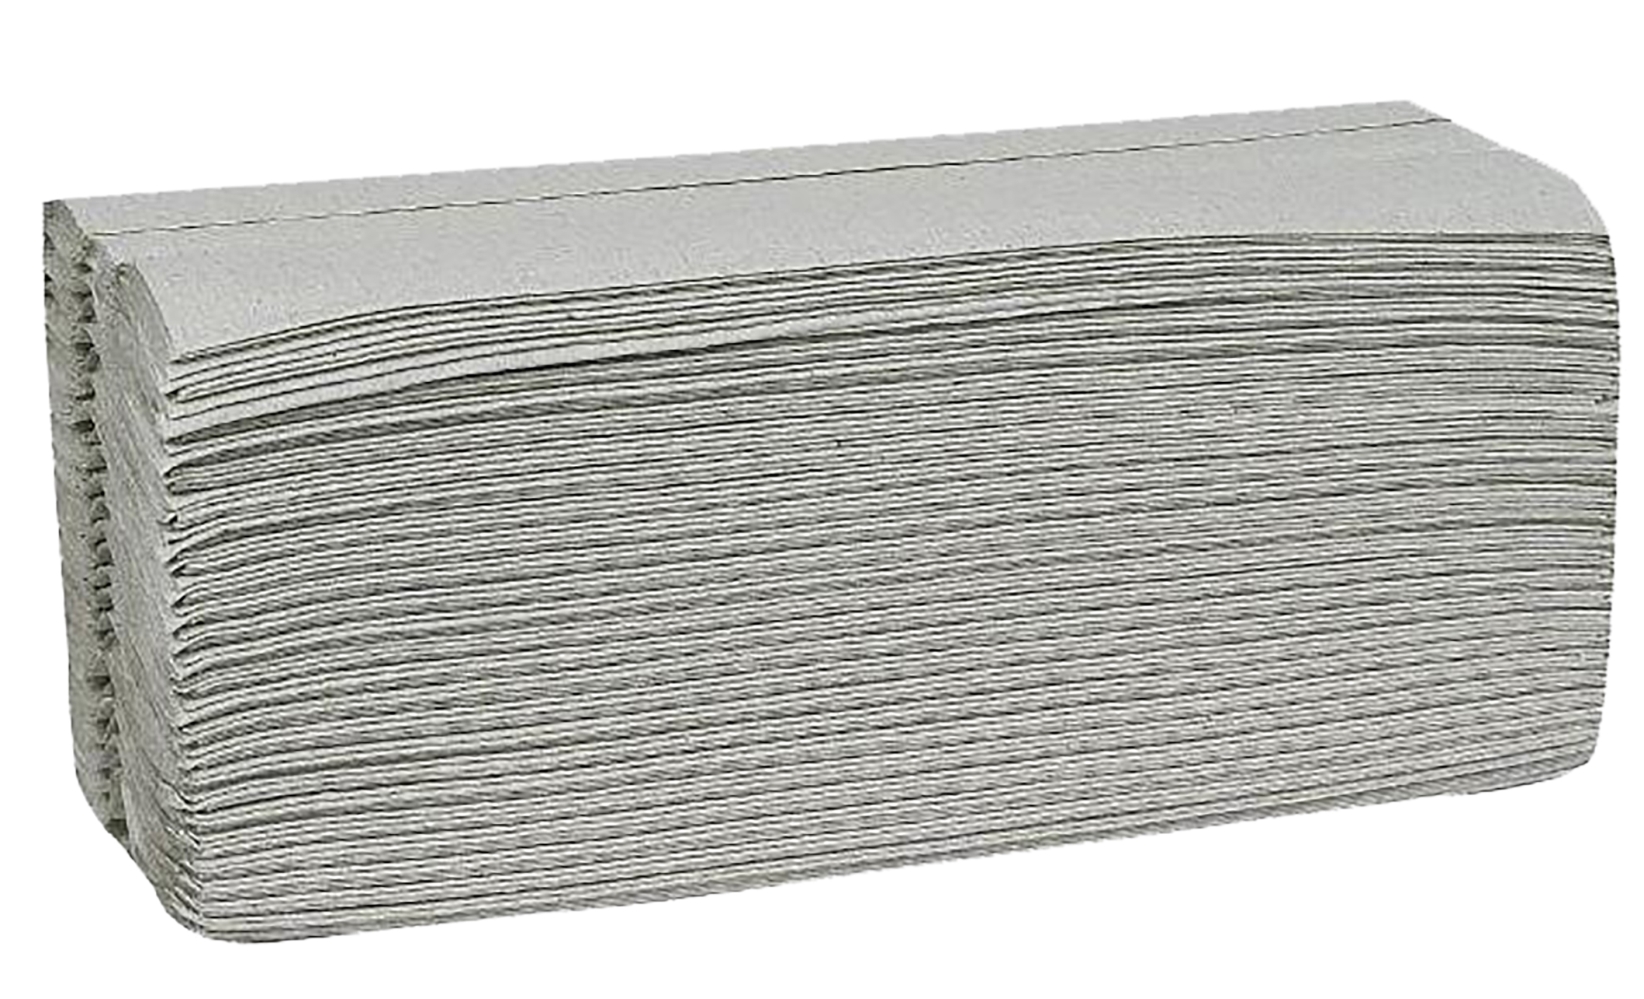 Pappershandduk 1-L c-vikt - 24,5x33cm Care-Ness natur - 182 st/förp.